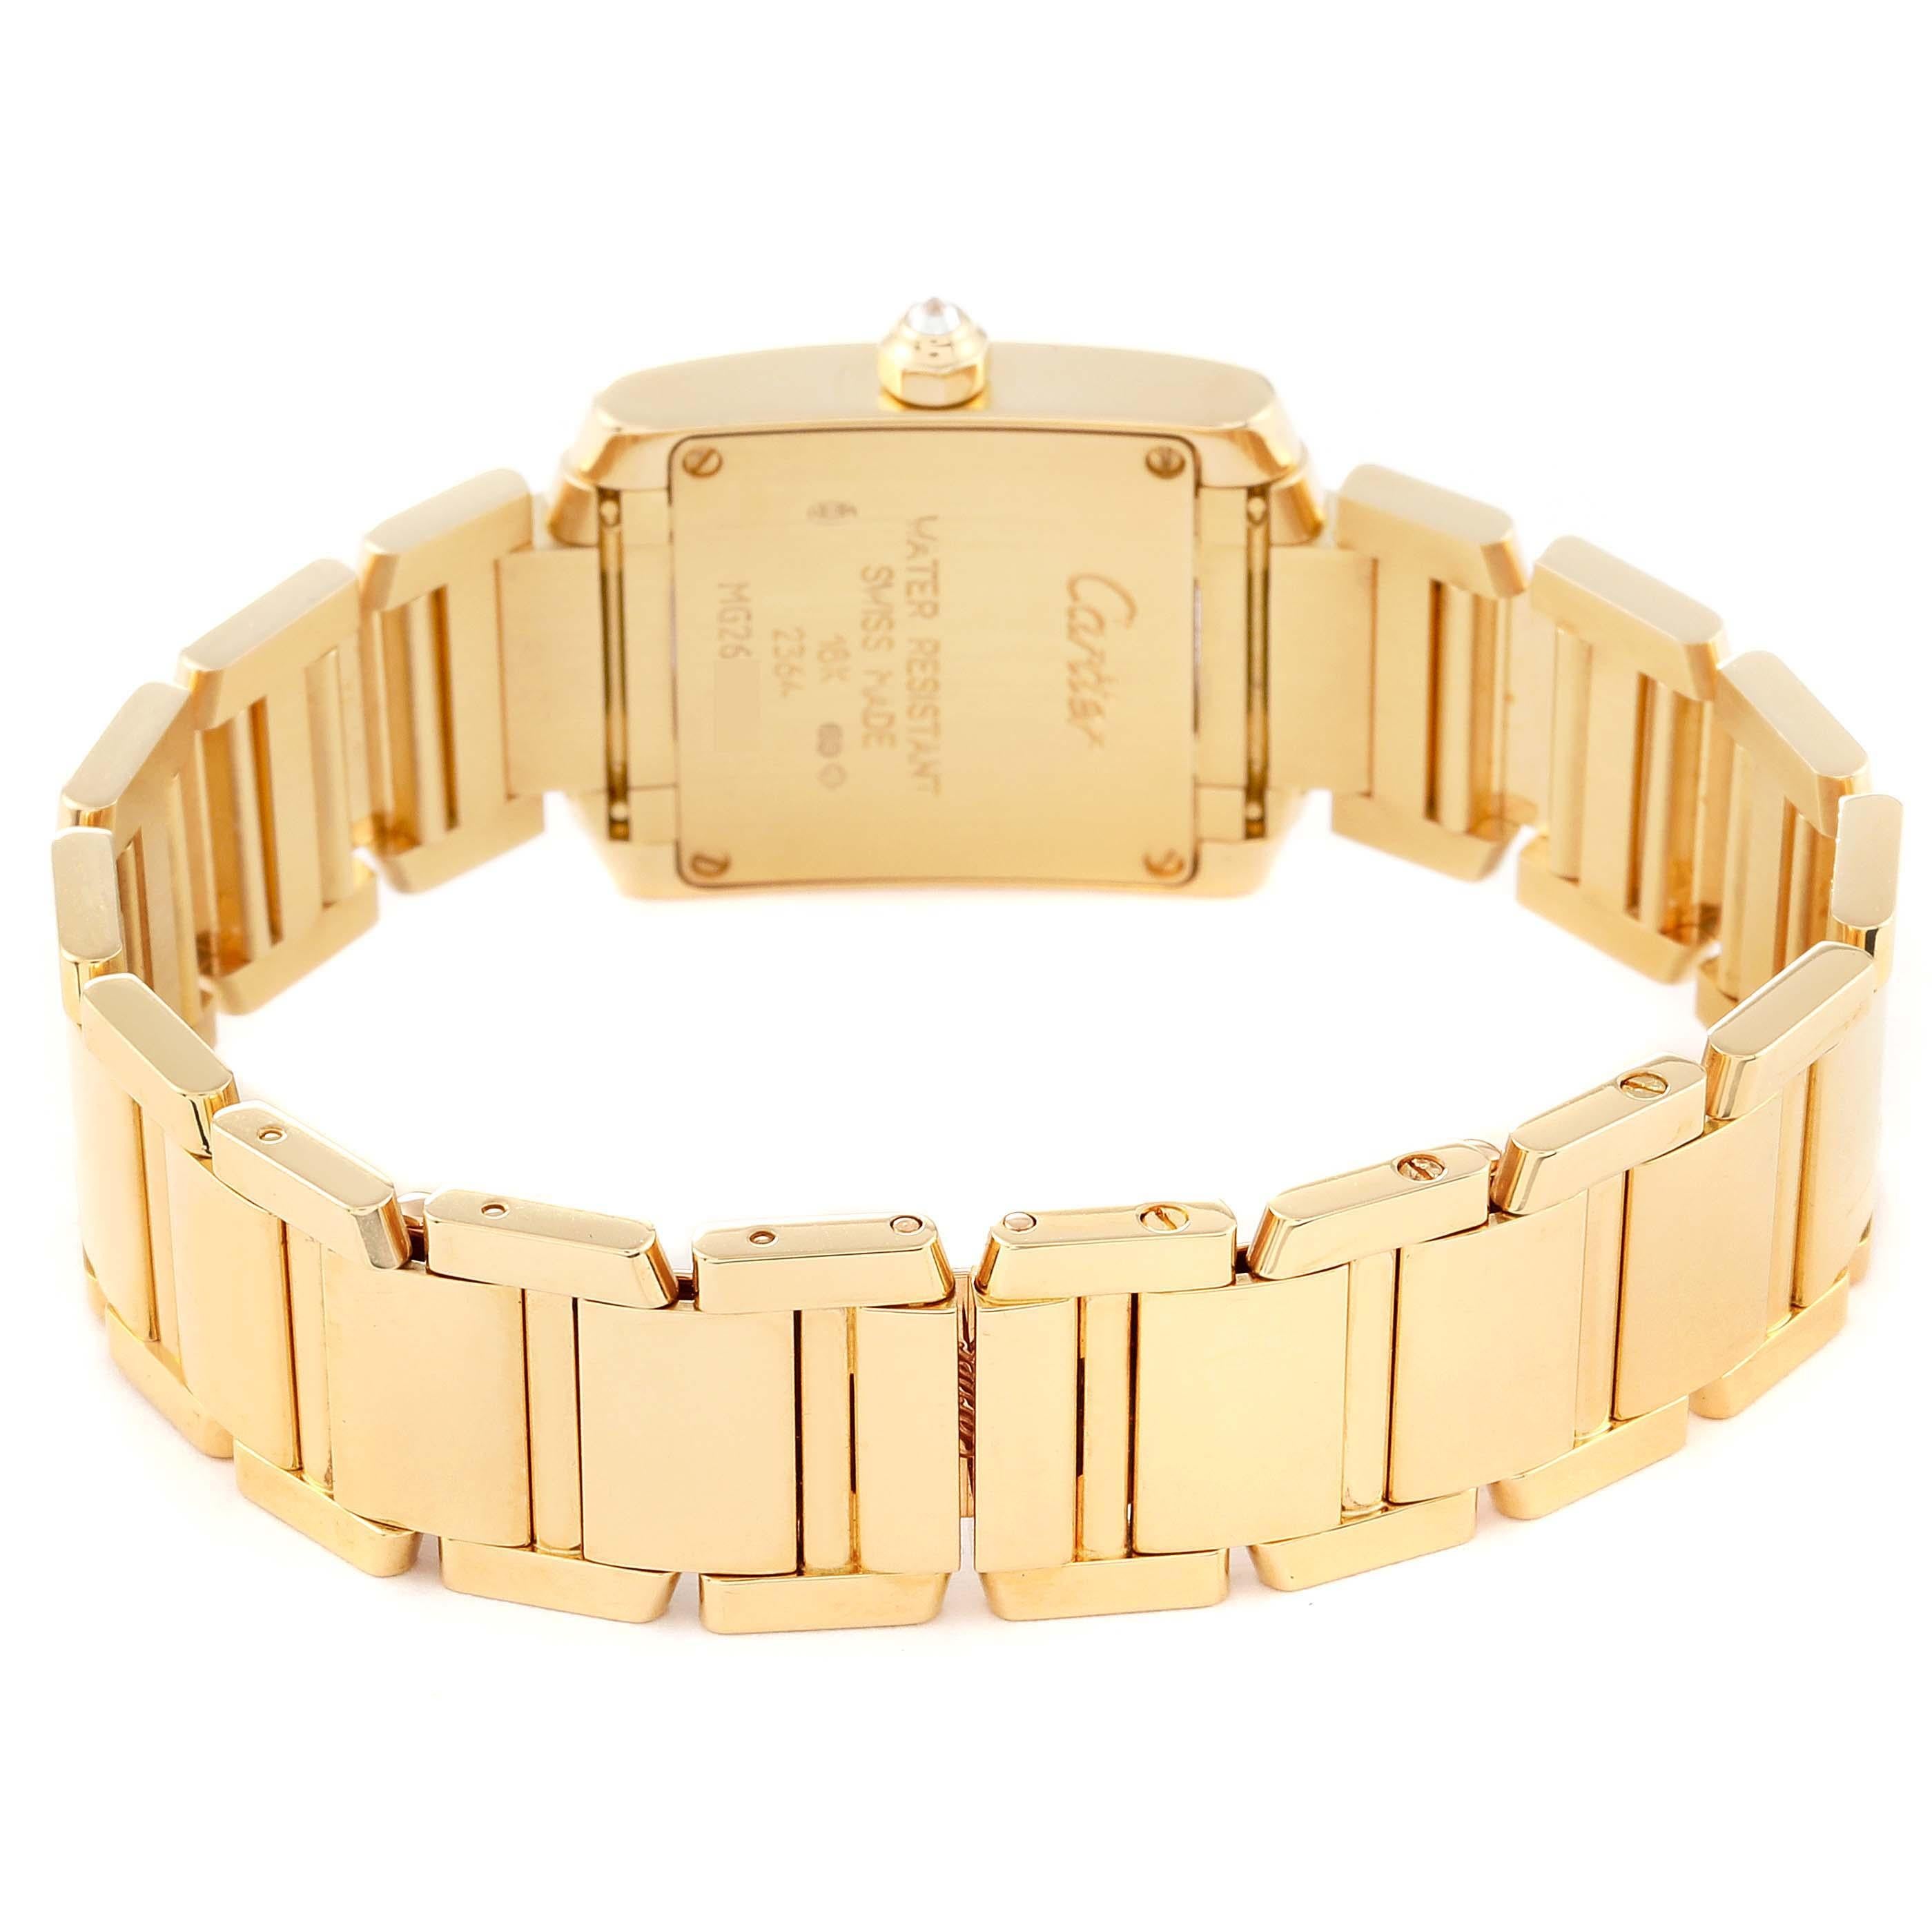 Cartier Tank Francaise Yellow Gold Diamond Ladies Watch WE1001R8. Quartz movement. Rectangular 18k yellow gold 20.0 x 25.0 mm case. Octagonal crown set with a diamond. Original Cartier factory diamond bezel. Scratch resistant sapphire crystal.